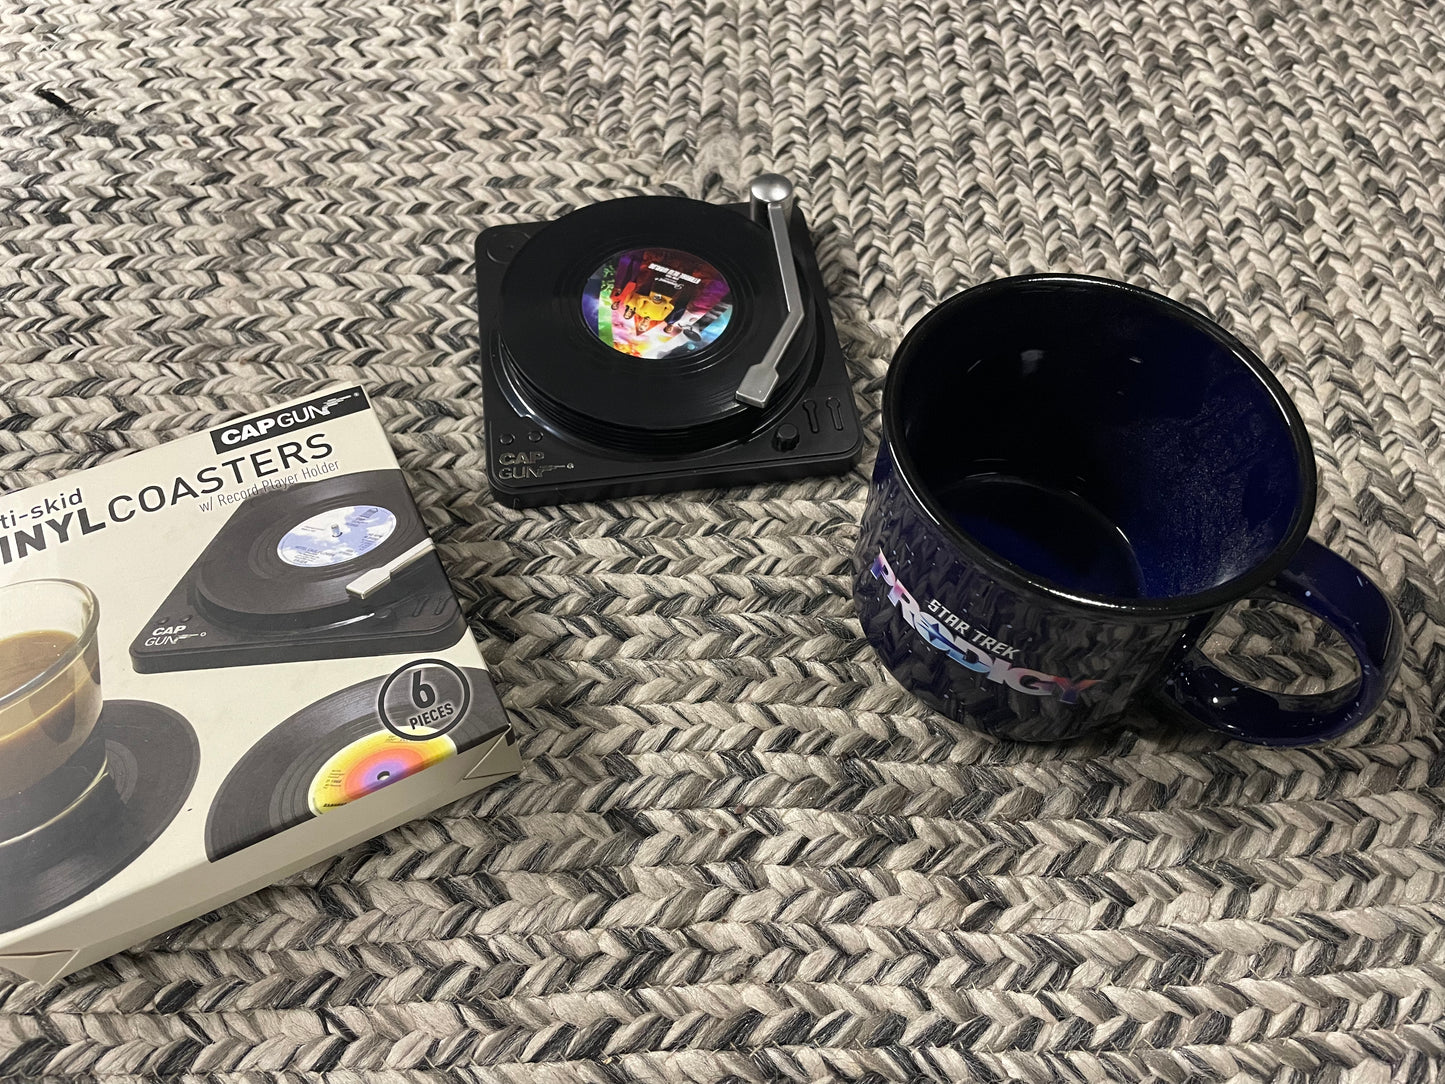 Star Trek Mini Record Player Coaster and Mug Set